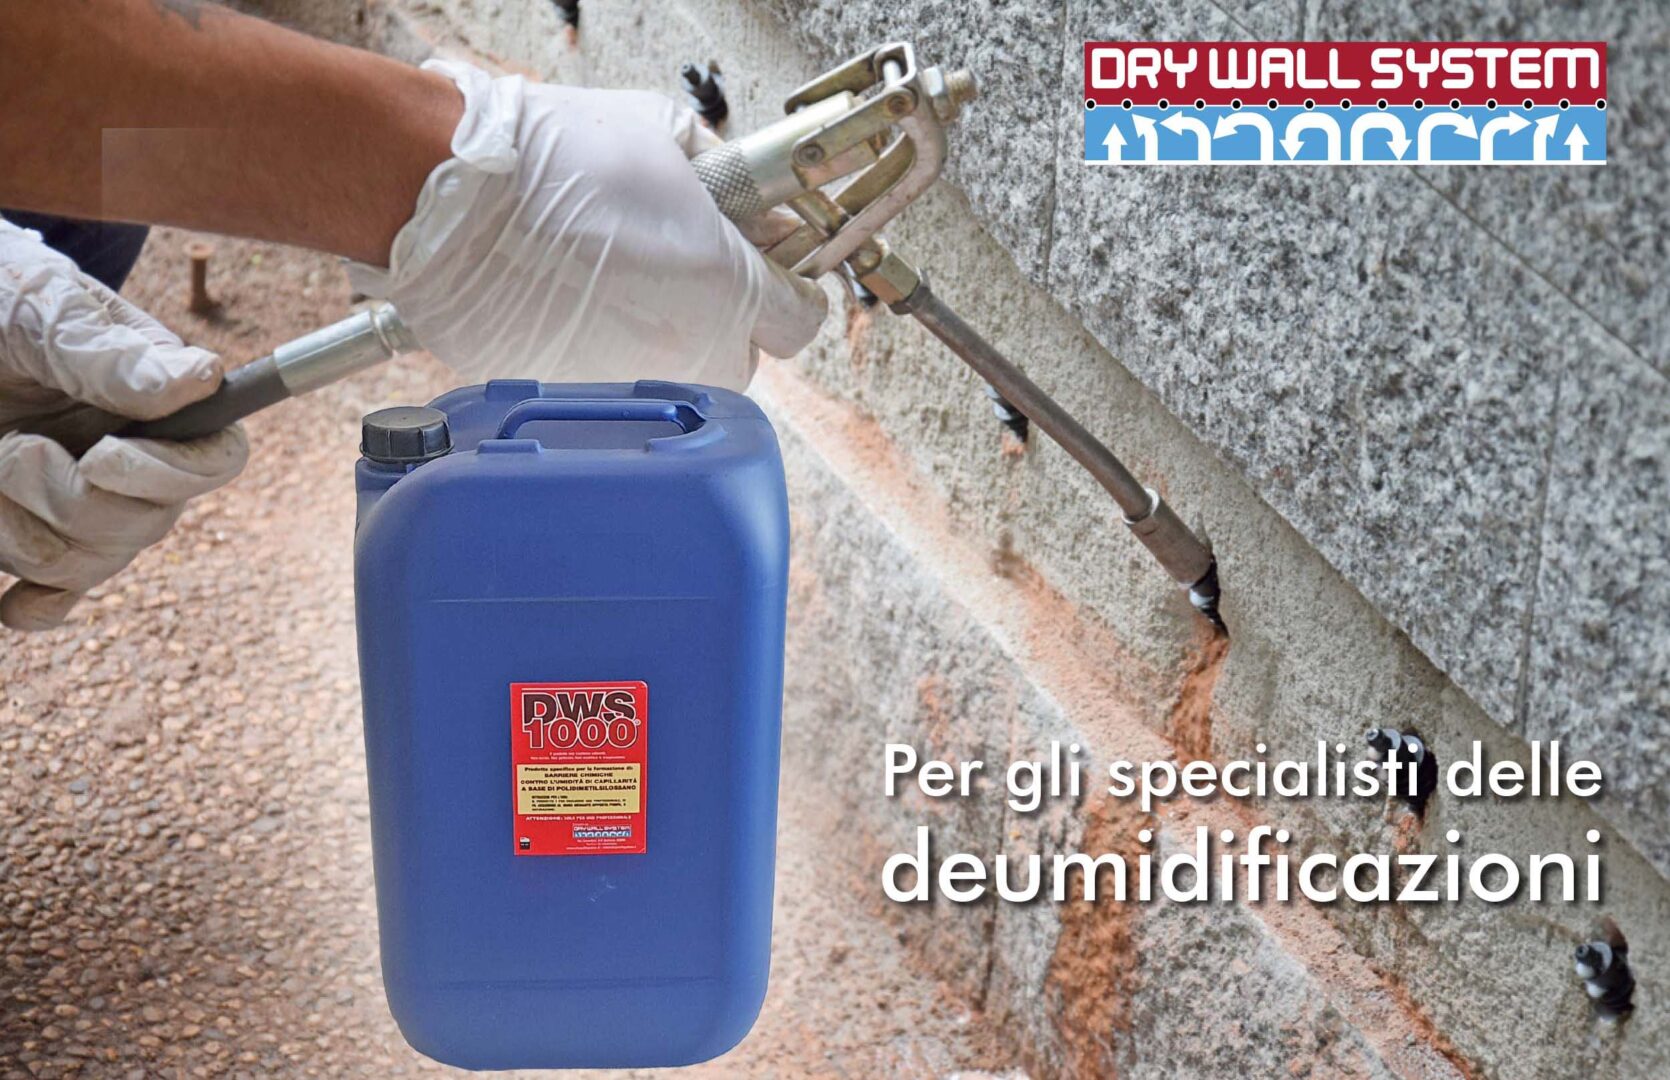 DWS 1000 Dry Wall System